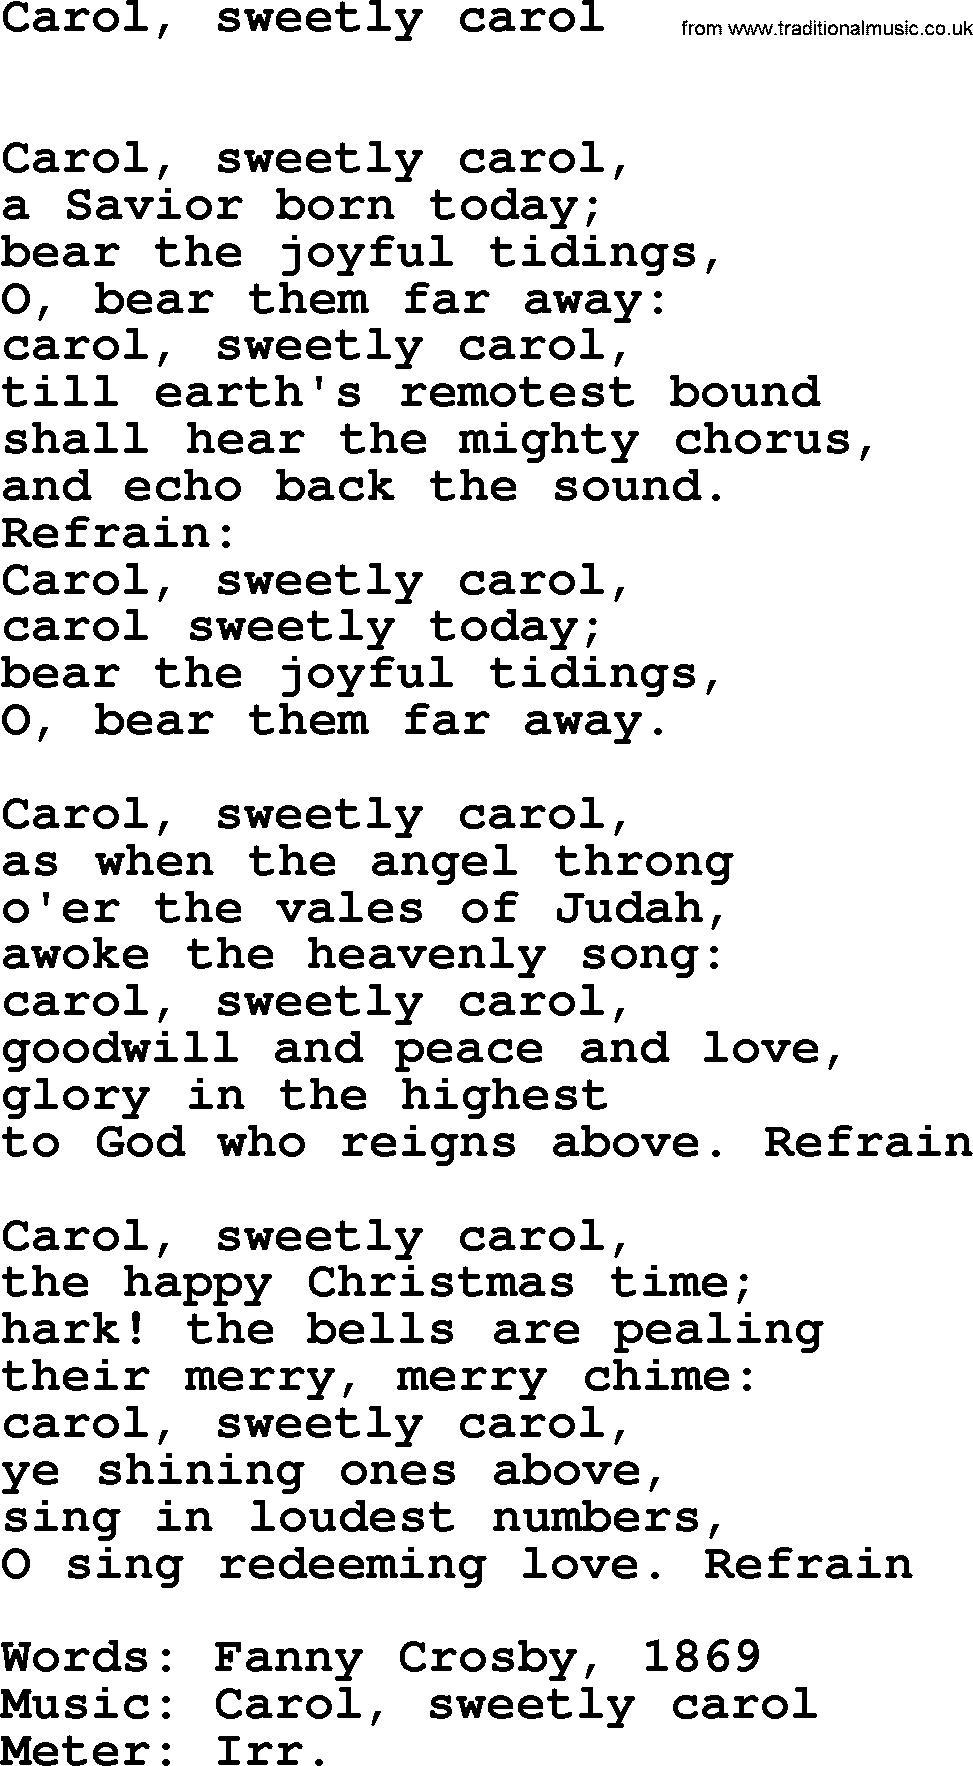 Book of Common Praise Hymn: Carol, Sweetly Carol.txt lyrics with midi music